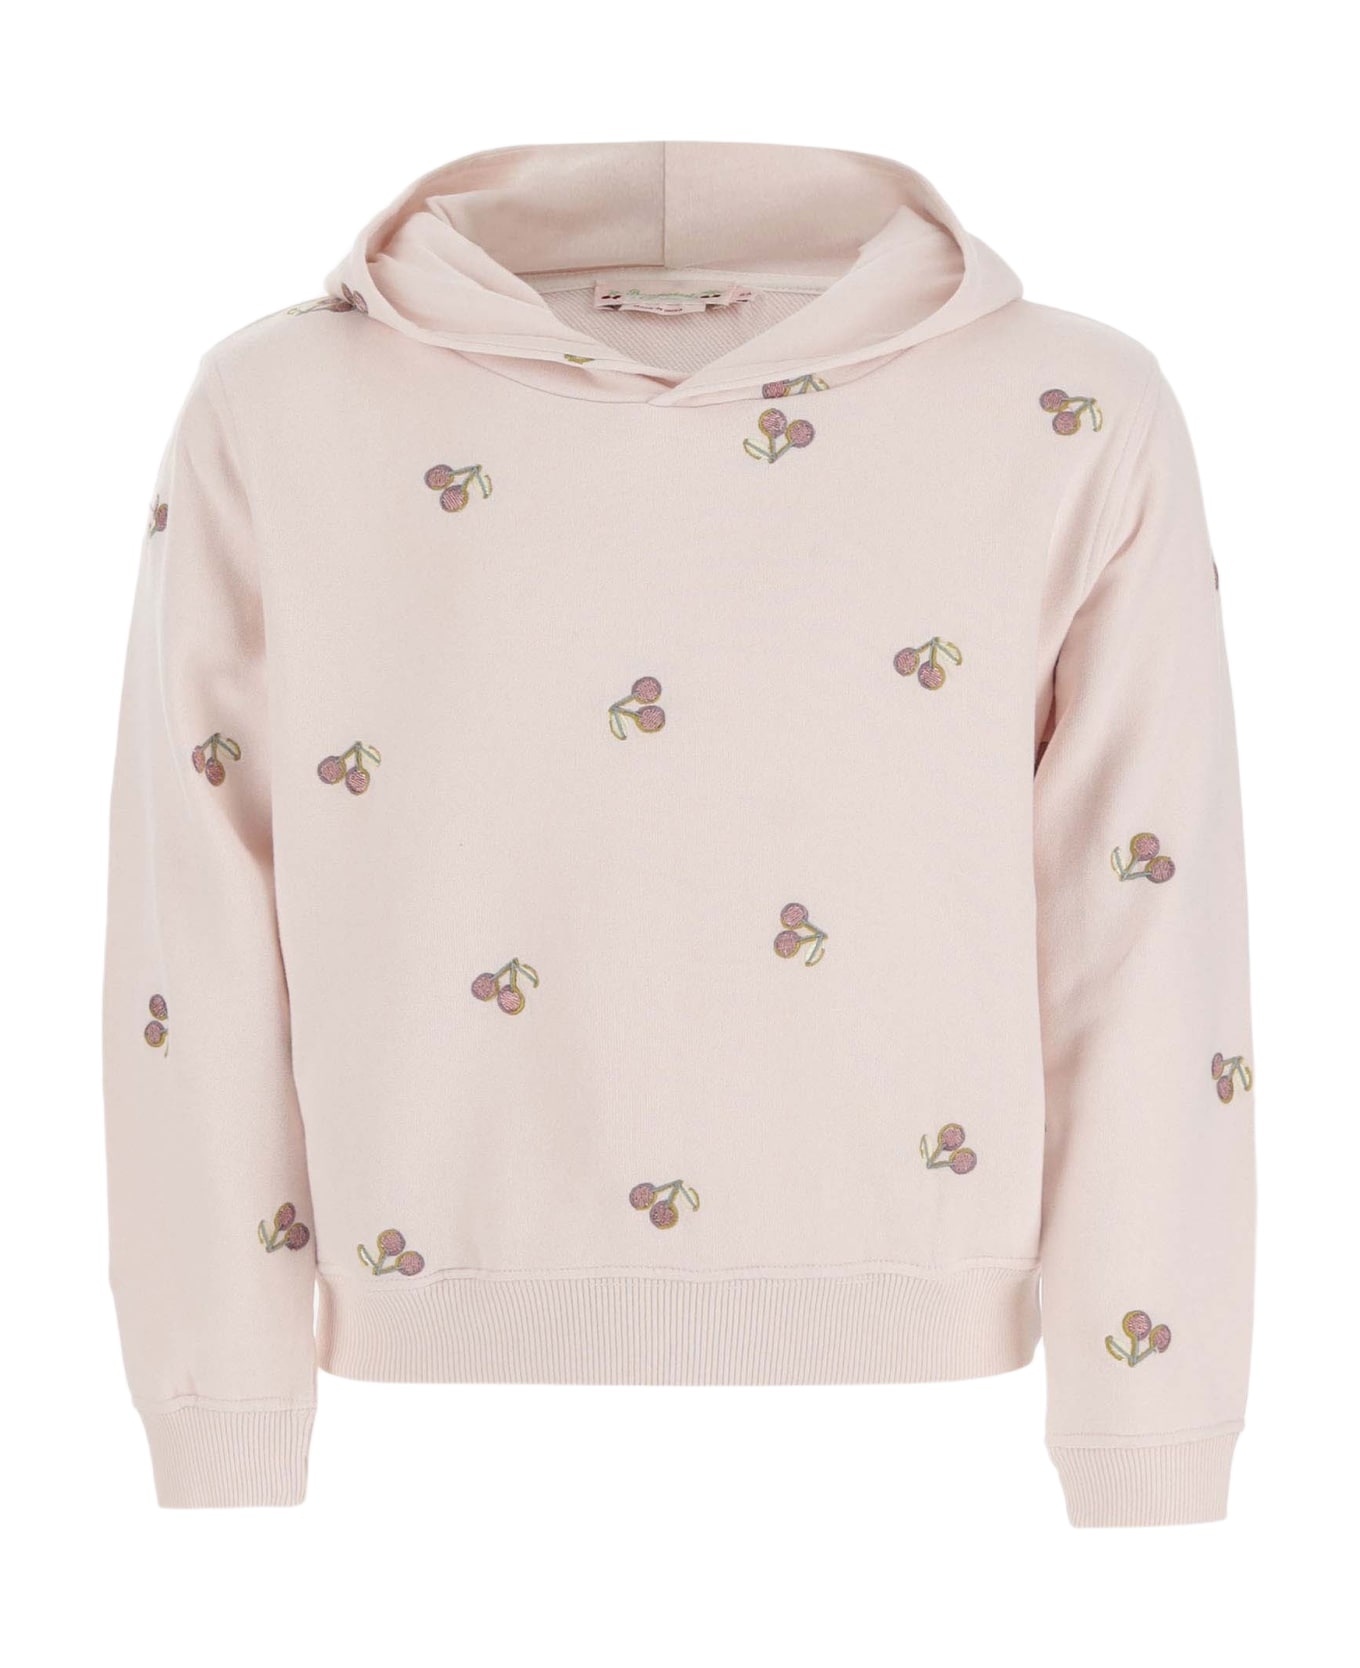 Bonpoint Cotton Sweatshirt With Cherries - Pink